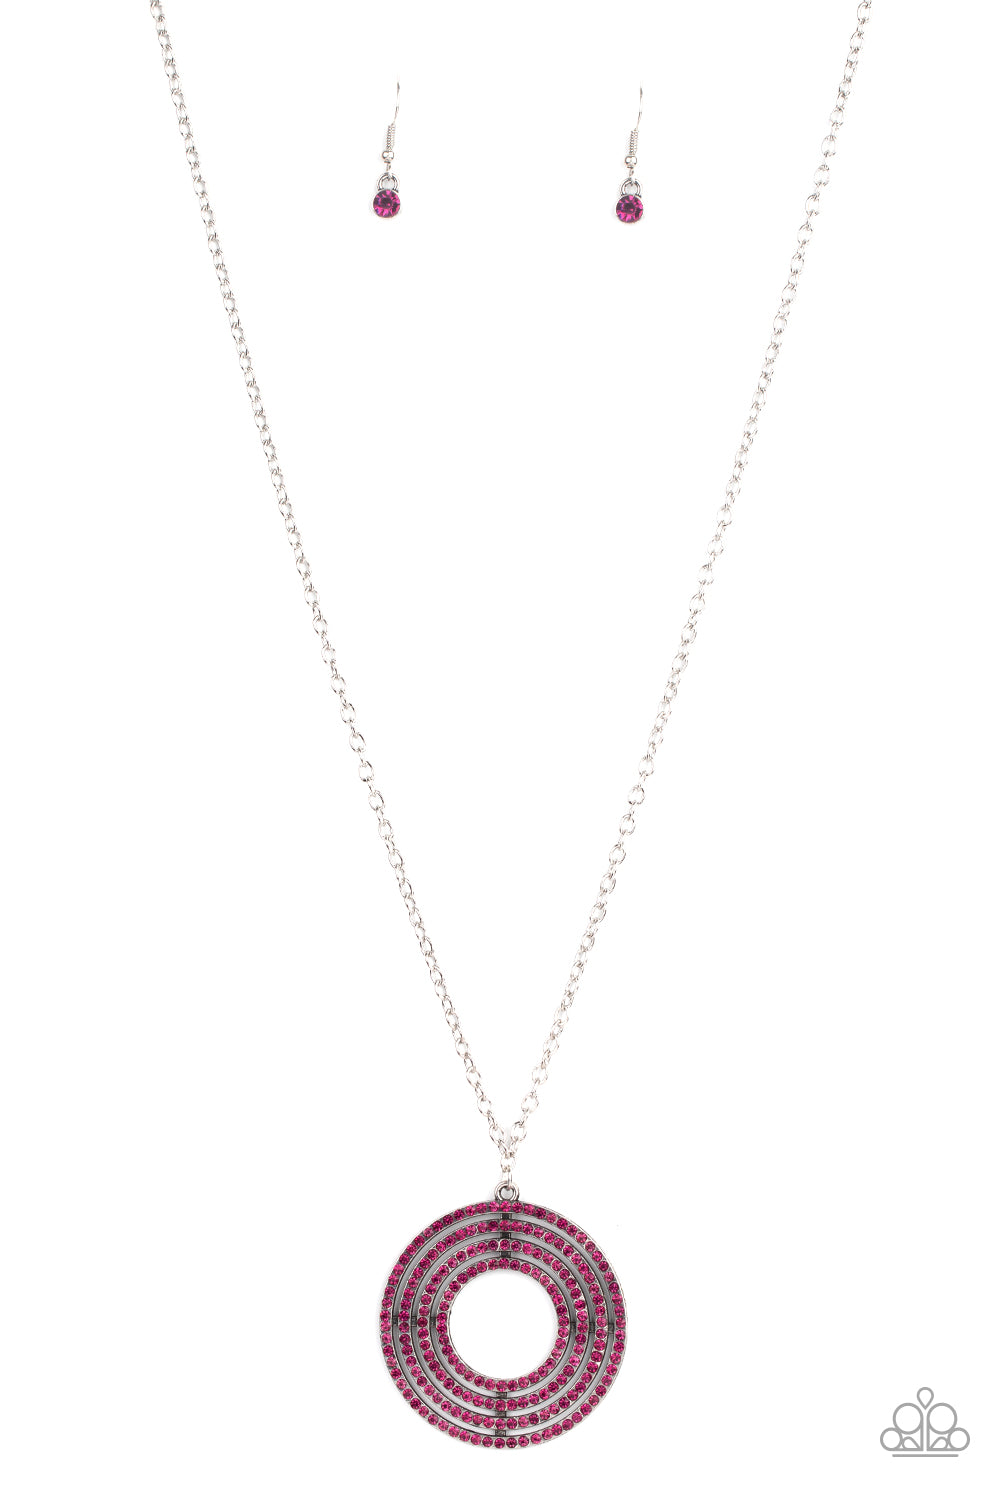 High-Value Target - Pink Necklace freeshipping - JewLz4u Gemstone Gallery